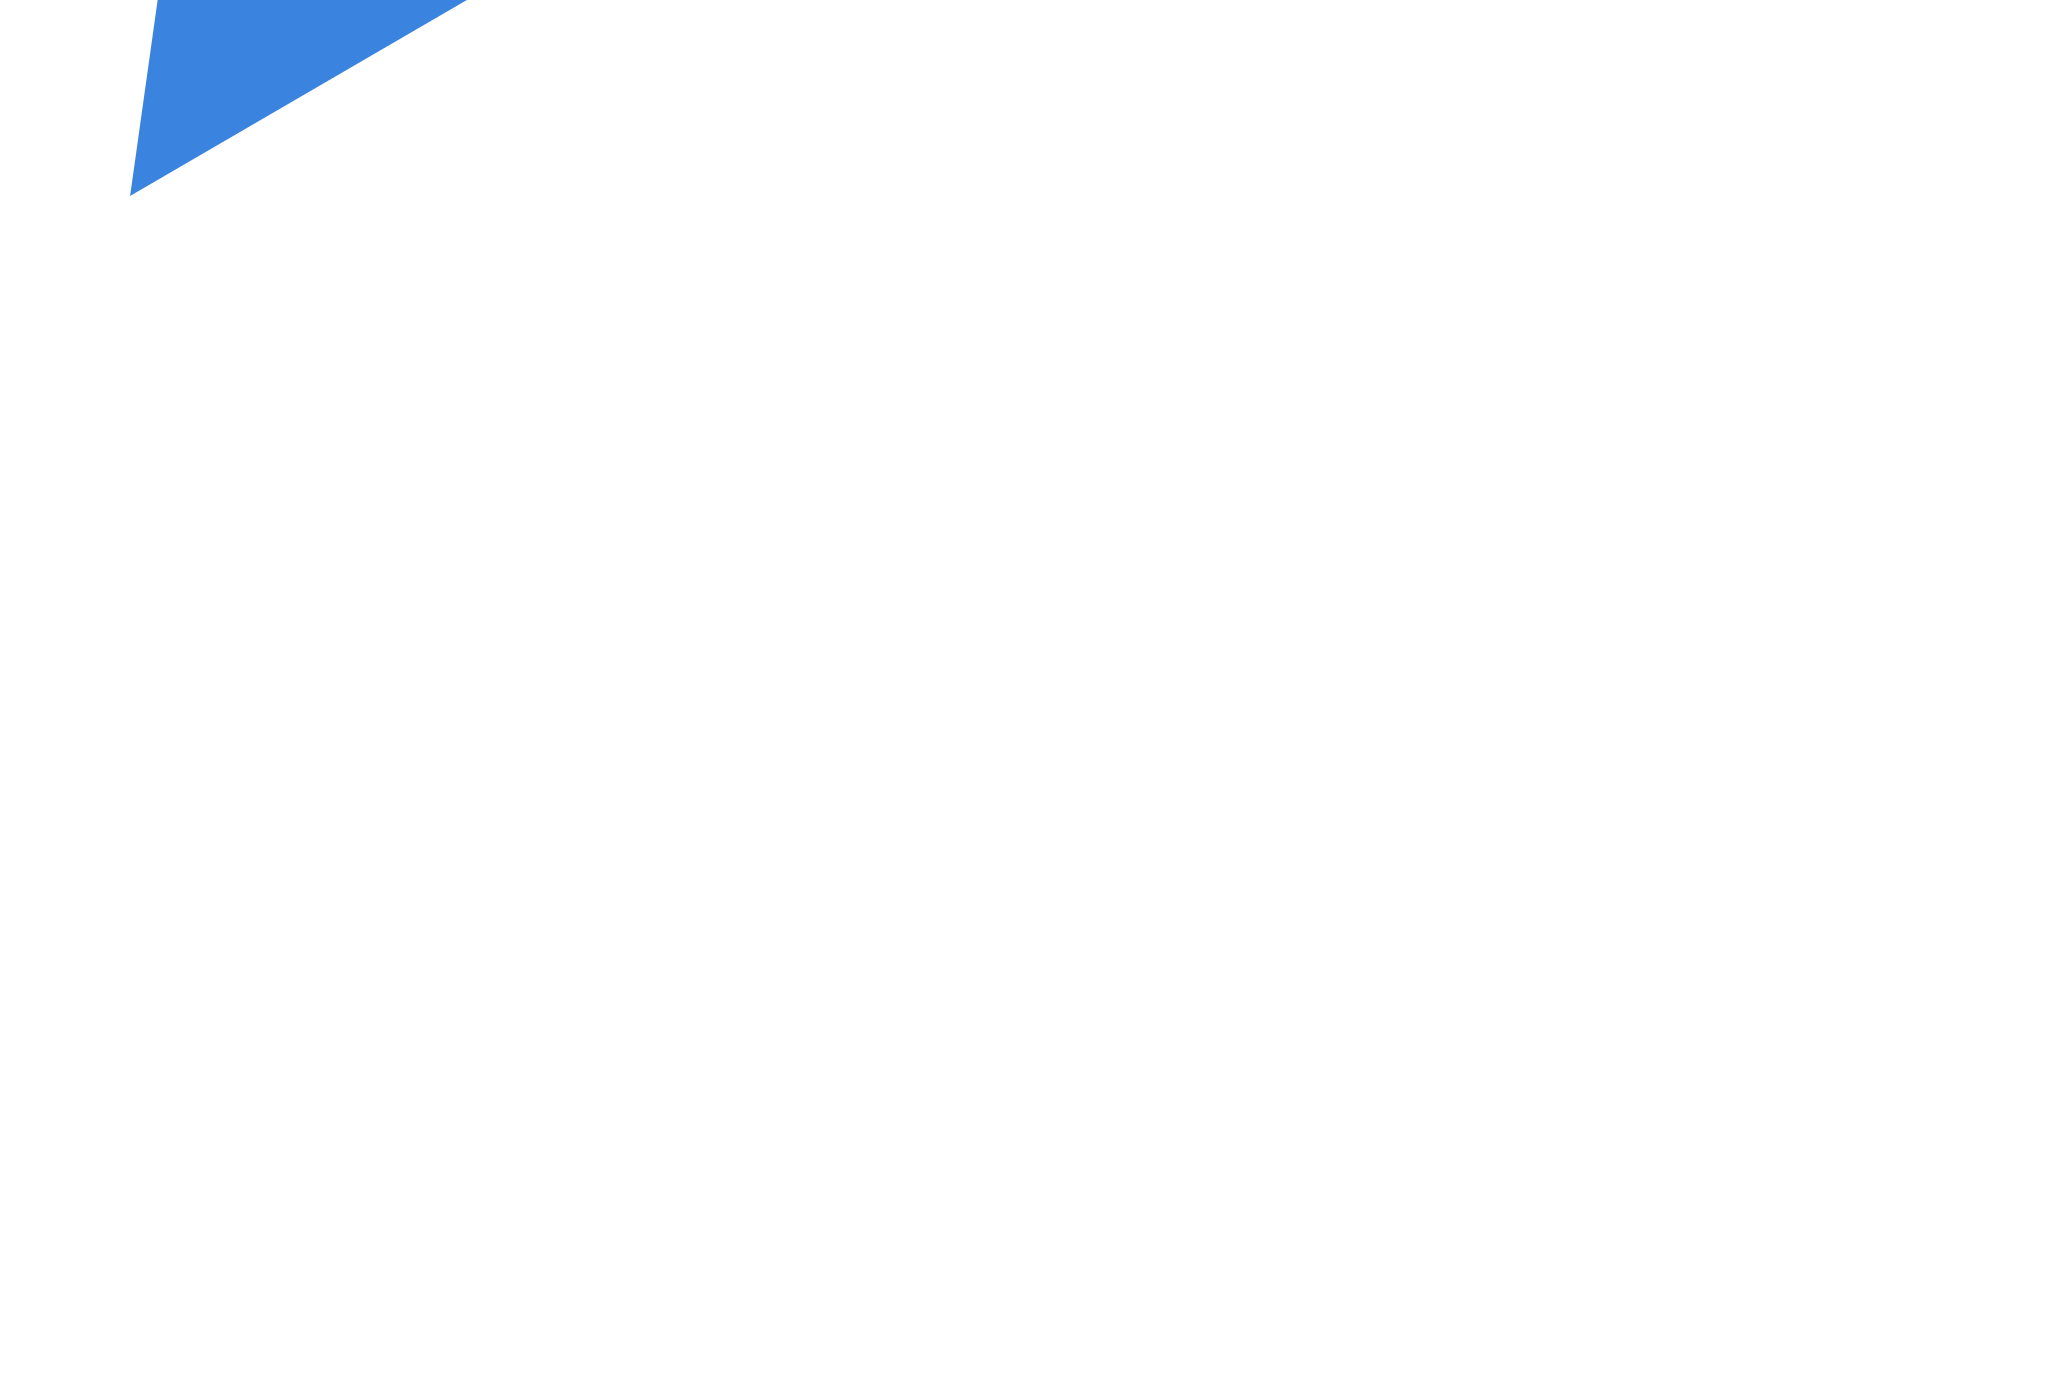 IHT Communications